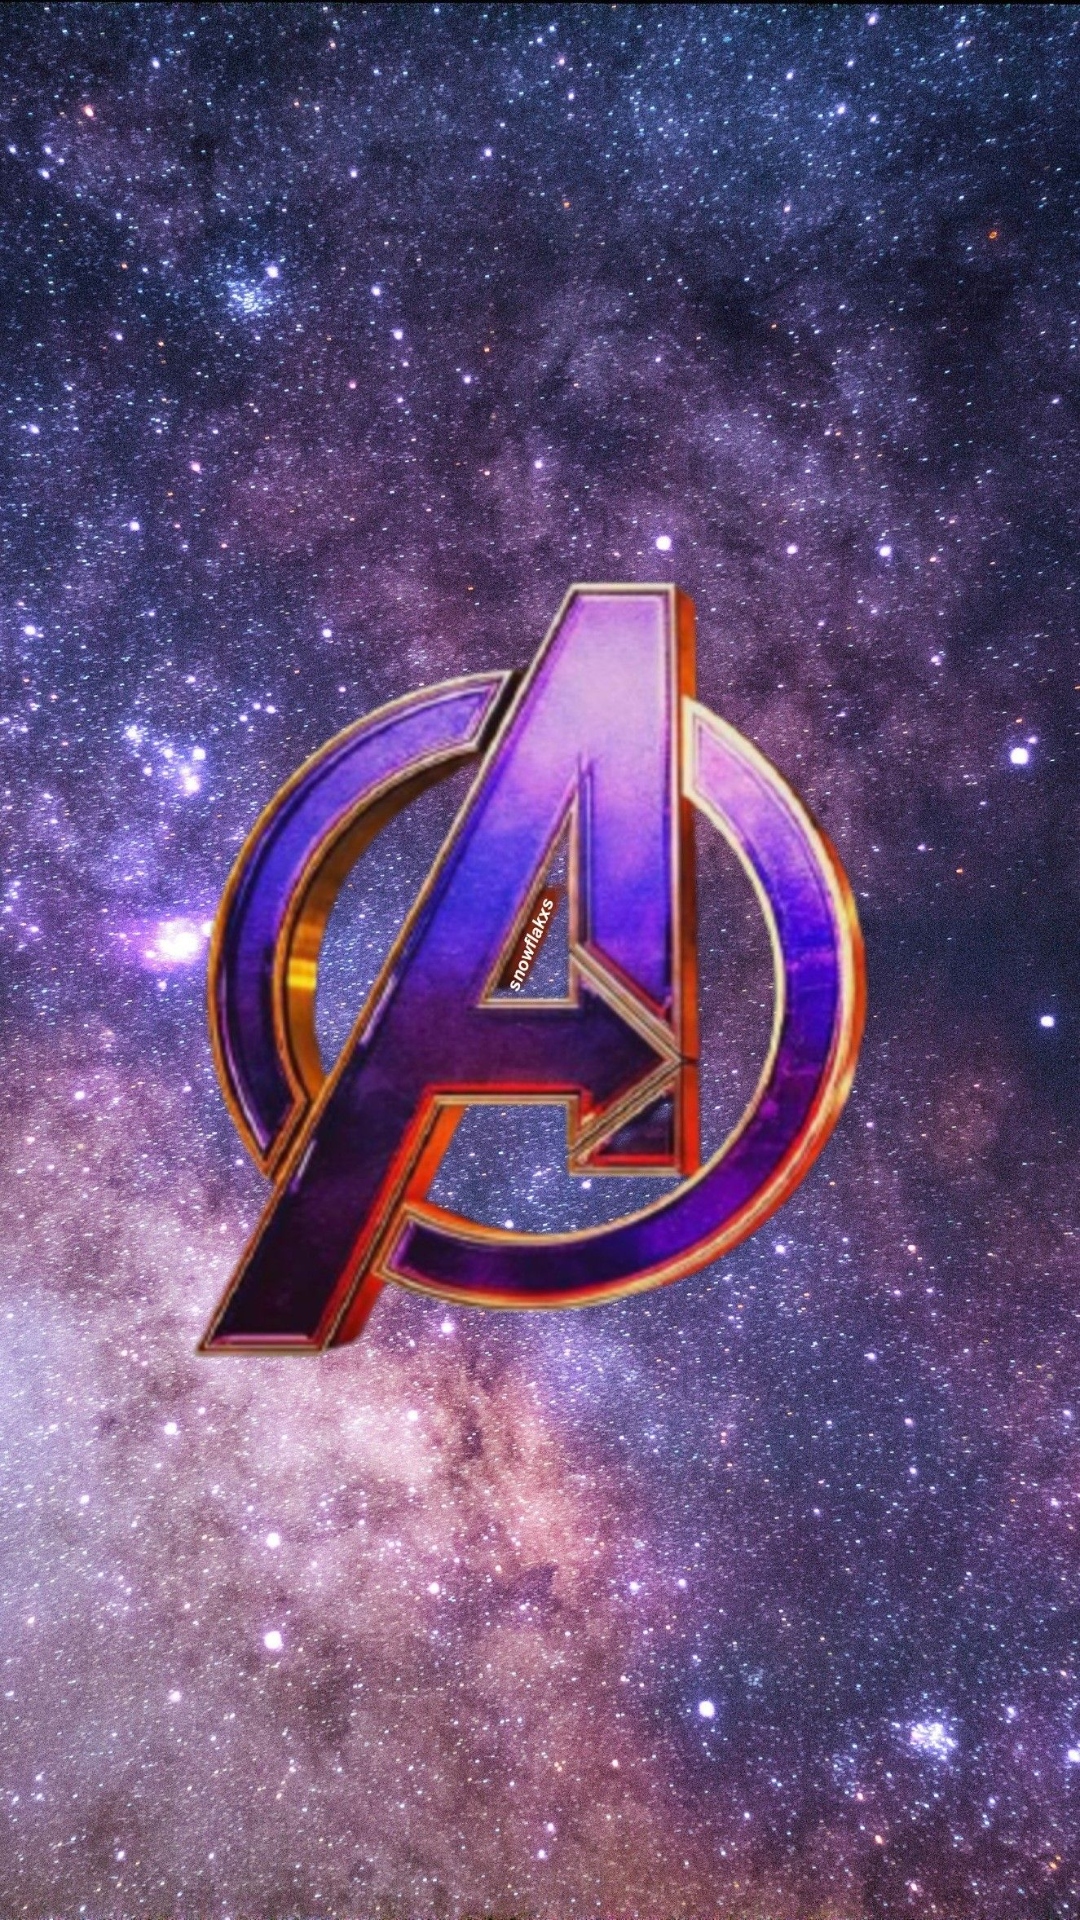 the avengers logo hd